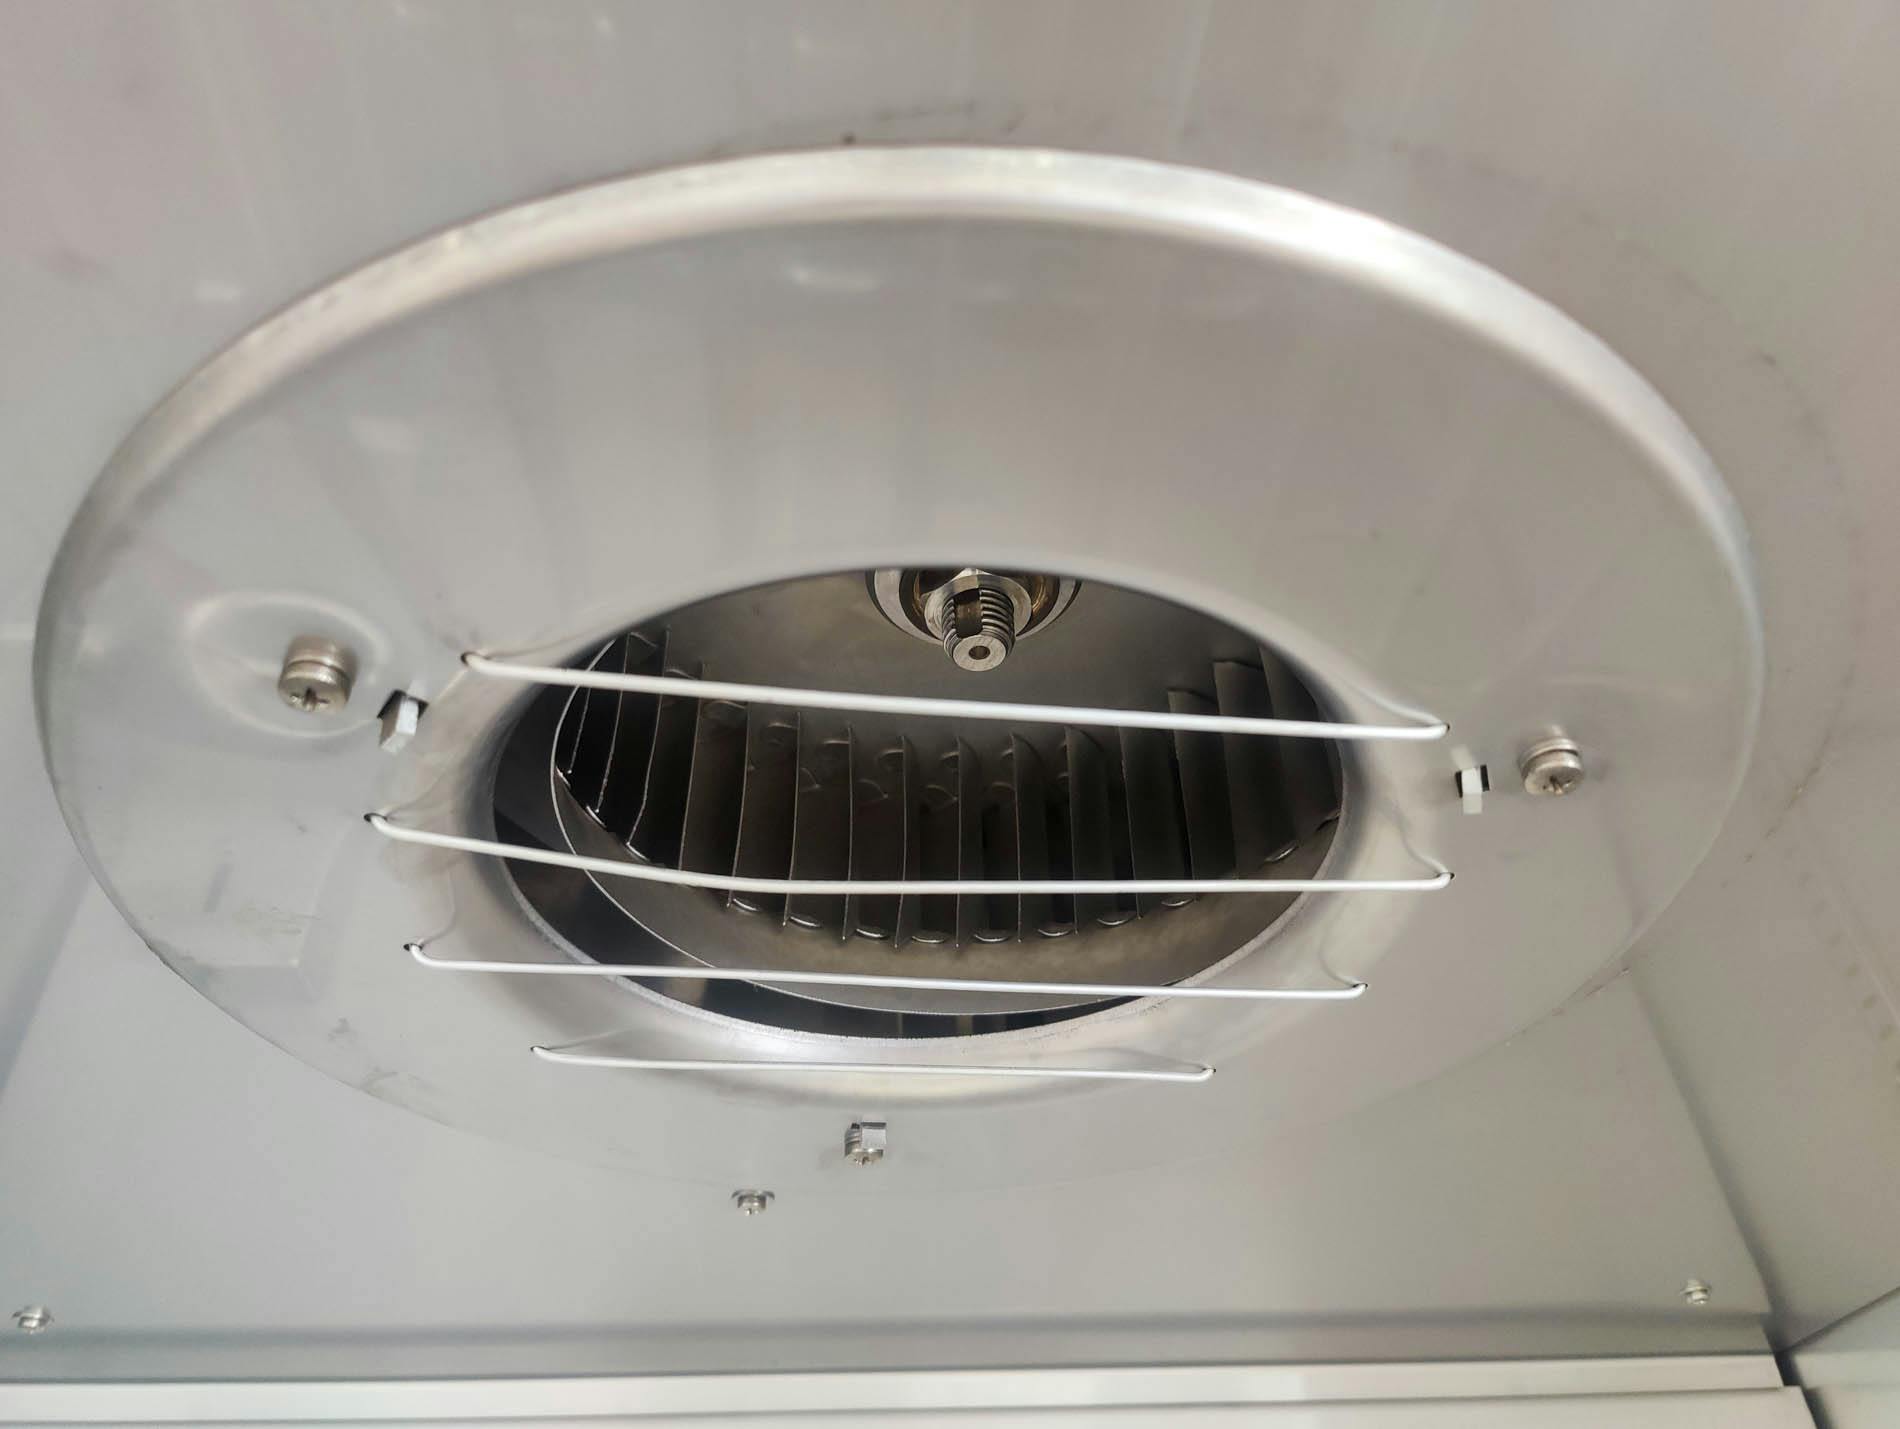 Feutron Klimasimulation KPK 400 - Drying oven - image 8